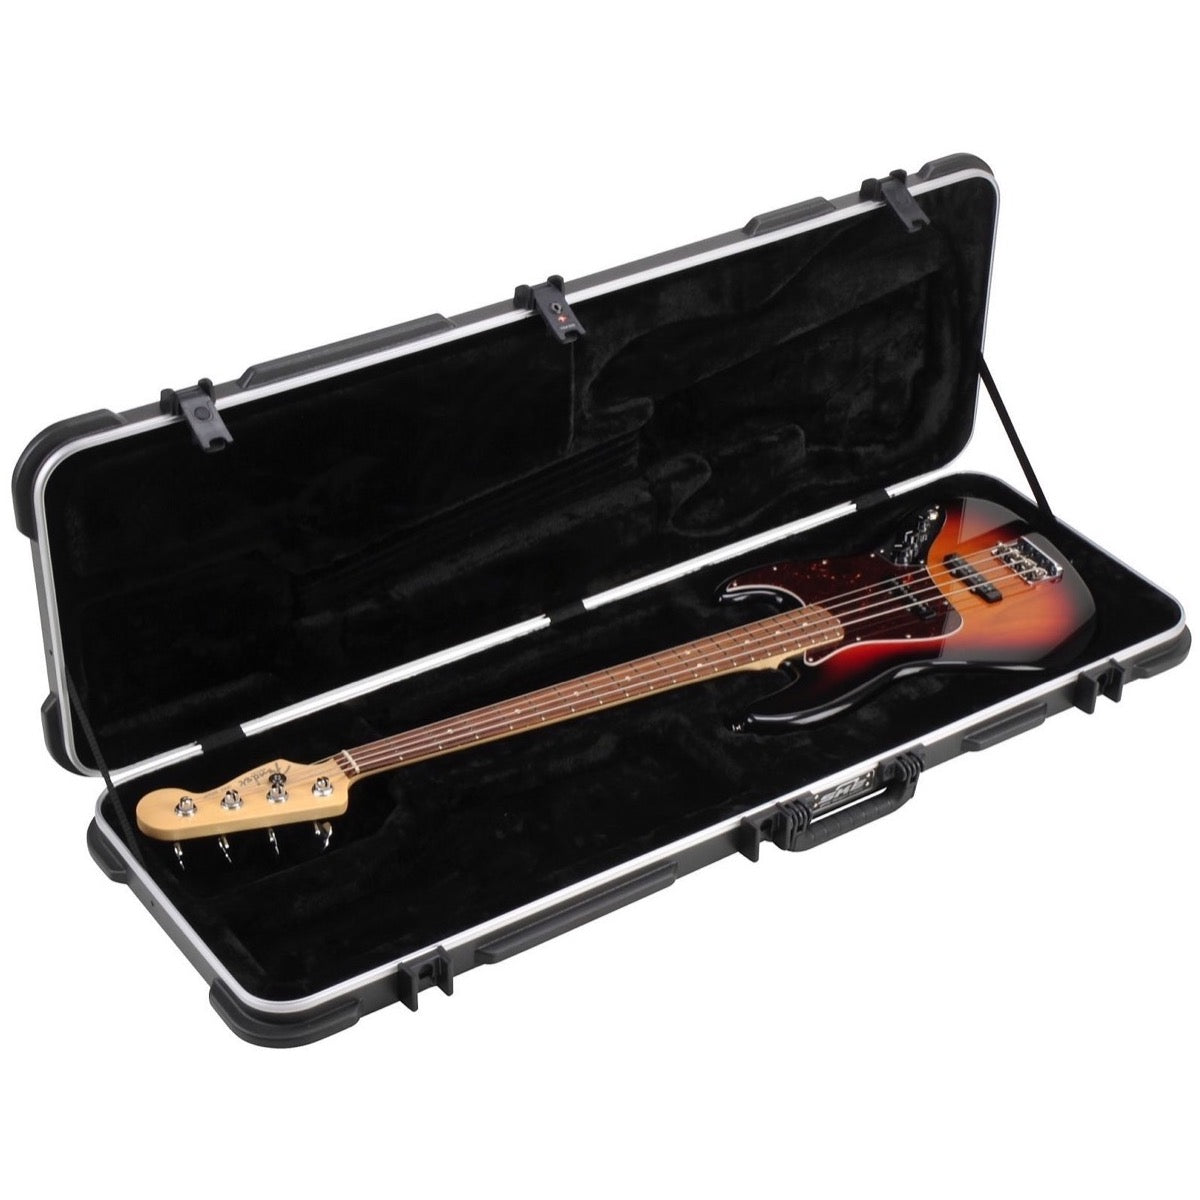 SKB 44 Molded Case for Bass Guitar